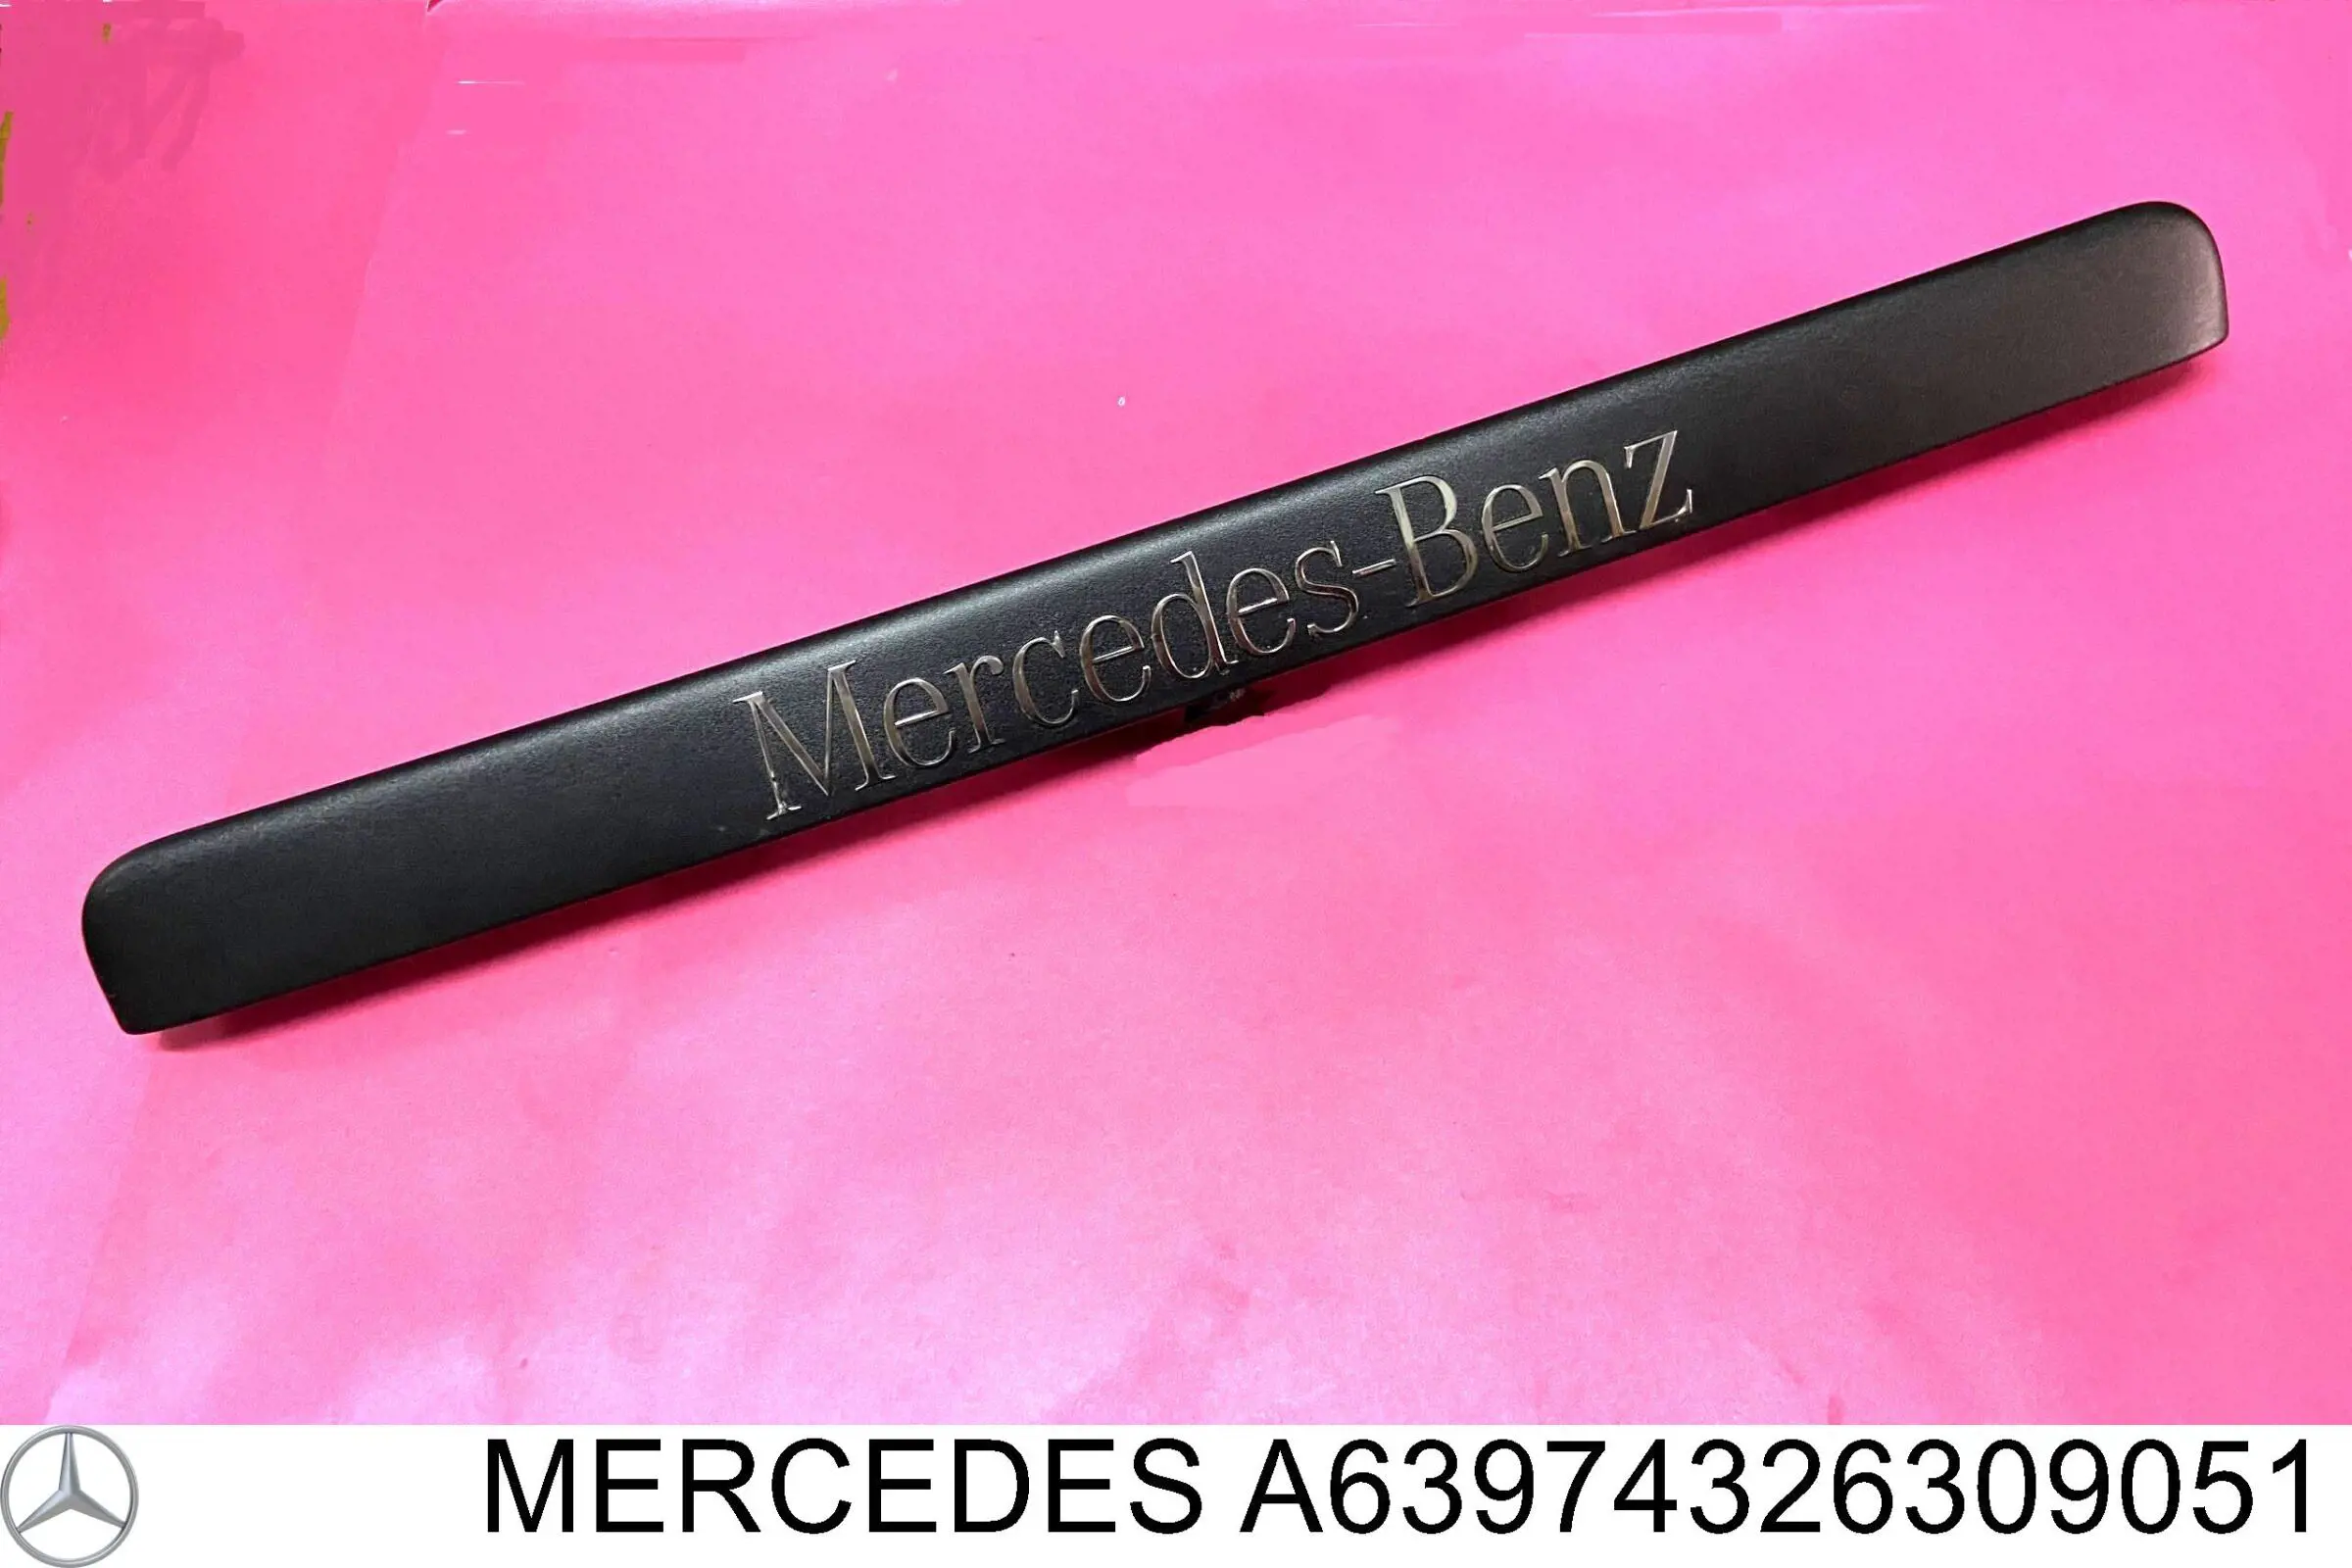 Эмблема крышки багажника (фирменный значок) на Мерседес-бенц Вито (Mercedes Vito) 639 фургон